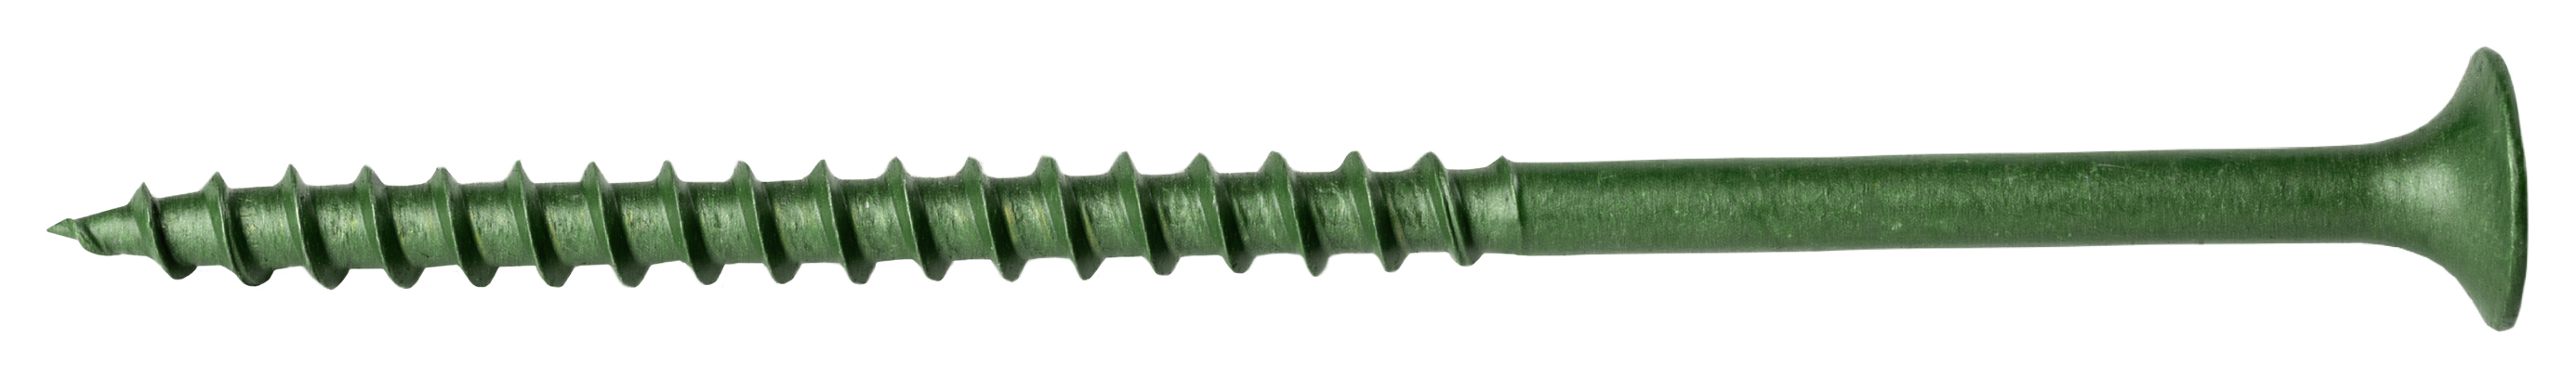 Wickes Exterior Grade Green Screws - 5.5 x 100mm - Pack of 50